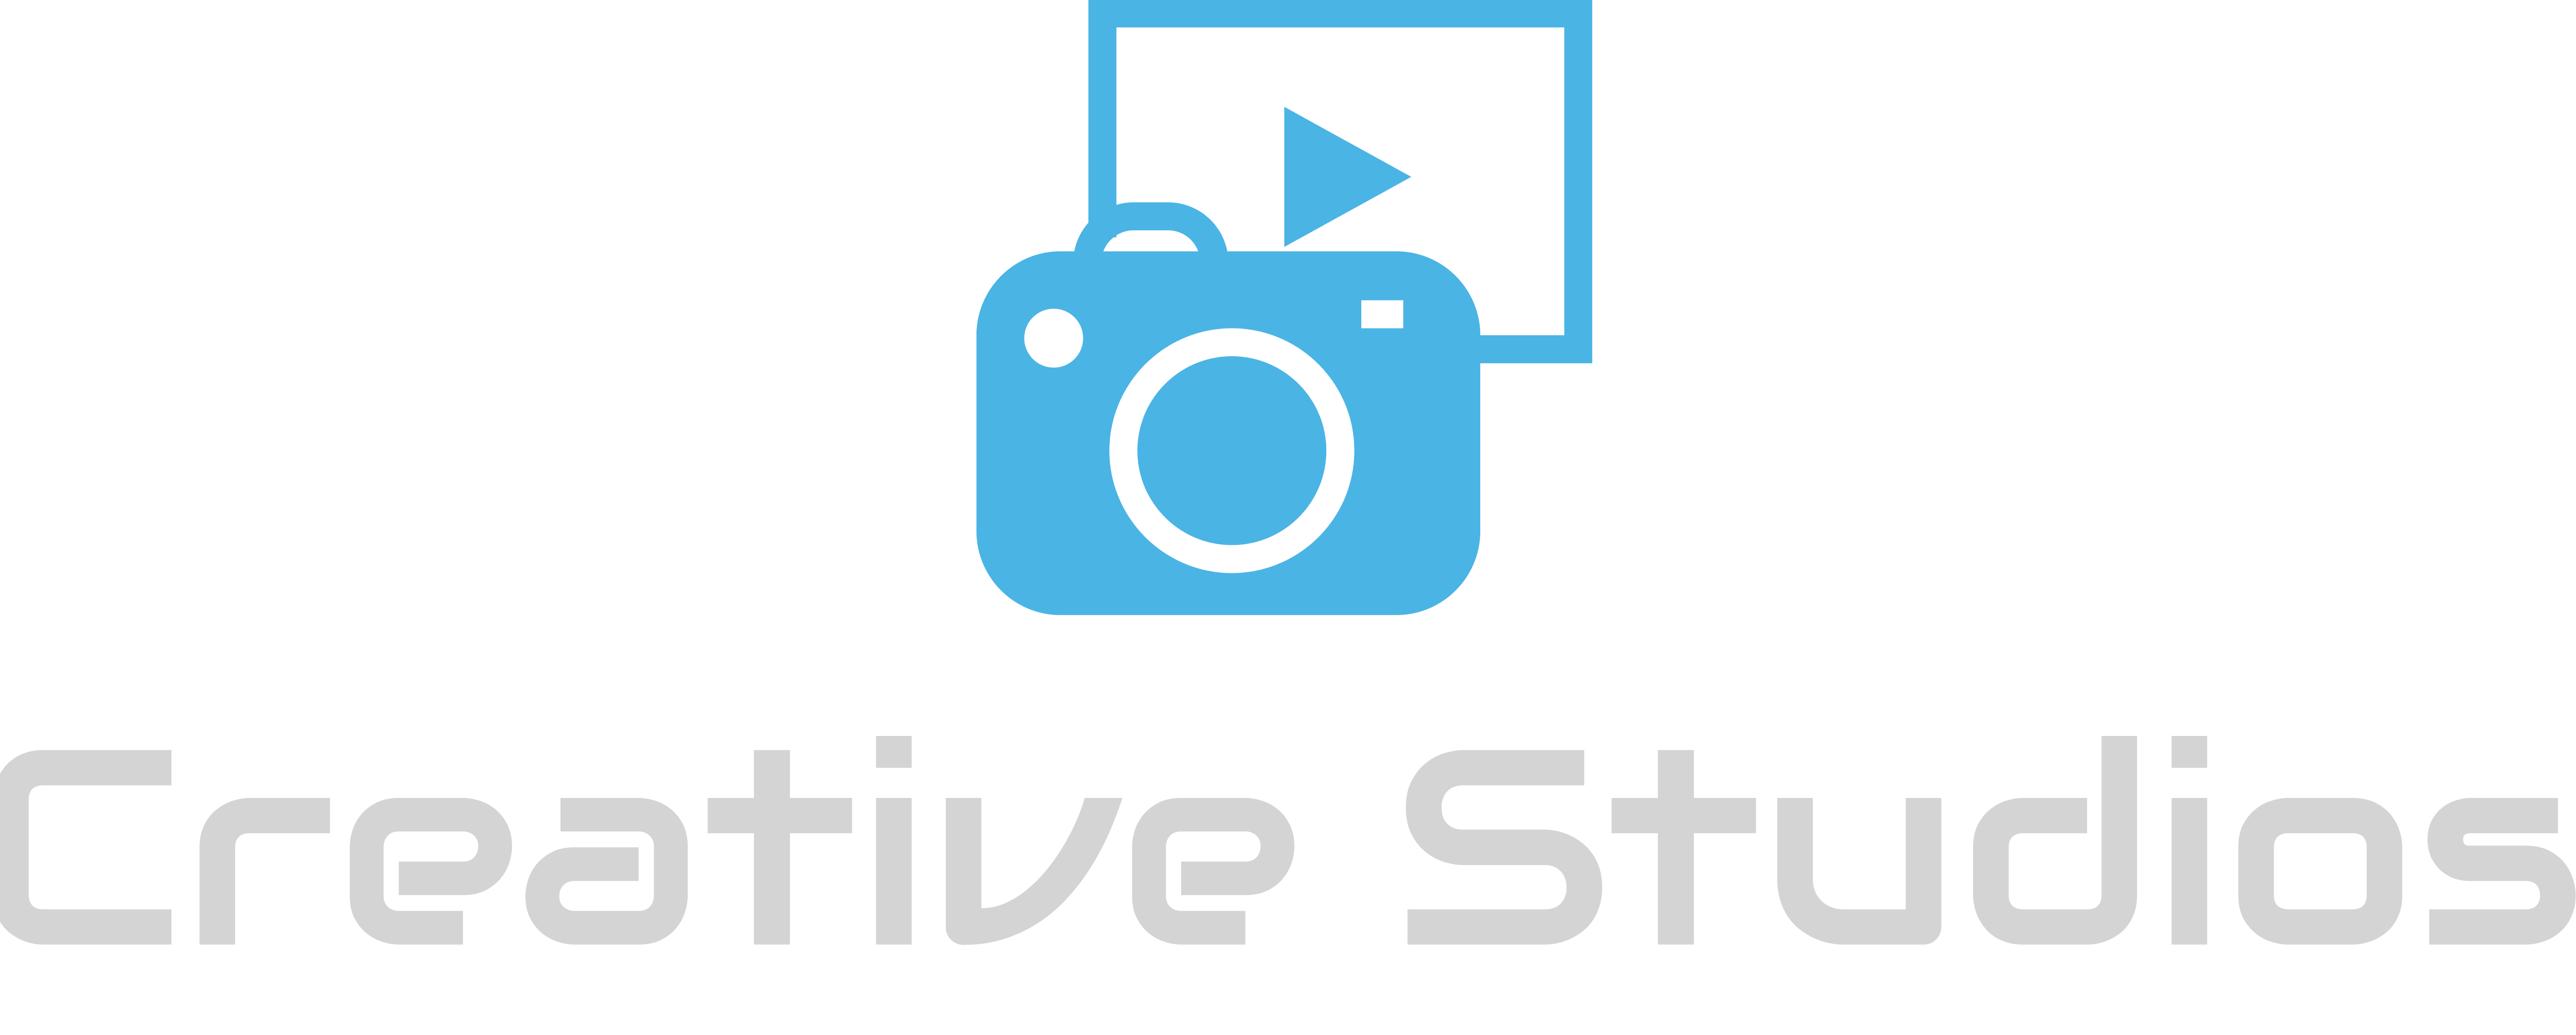 Creative Studios Logo 3